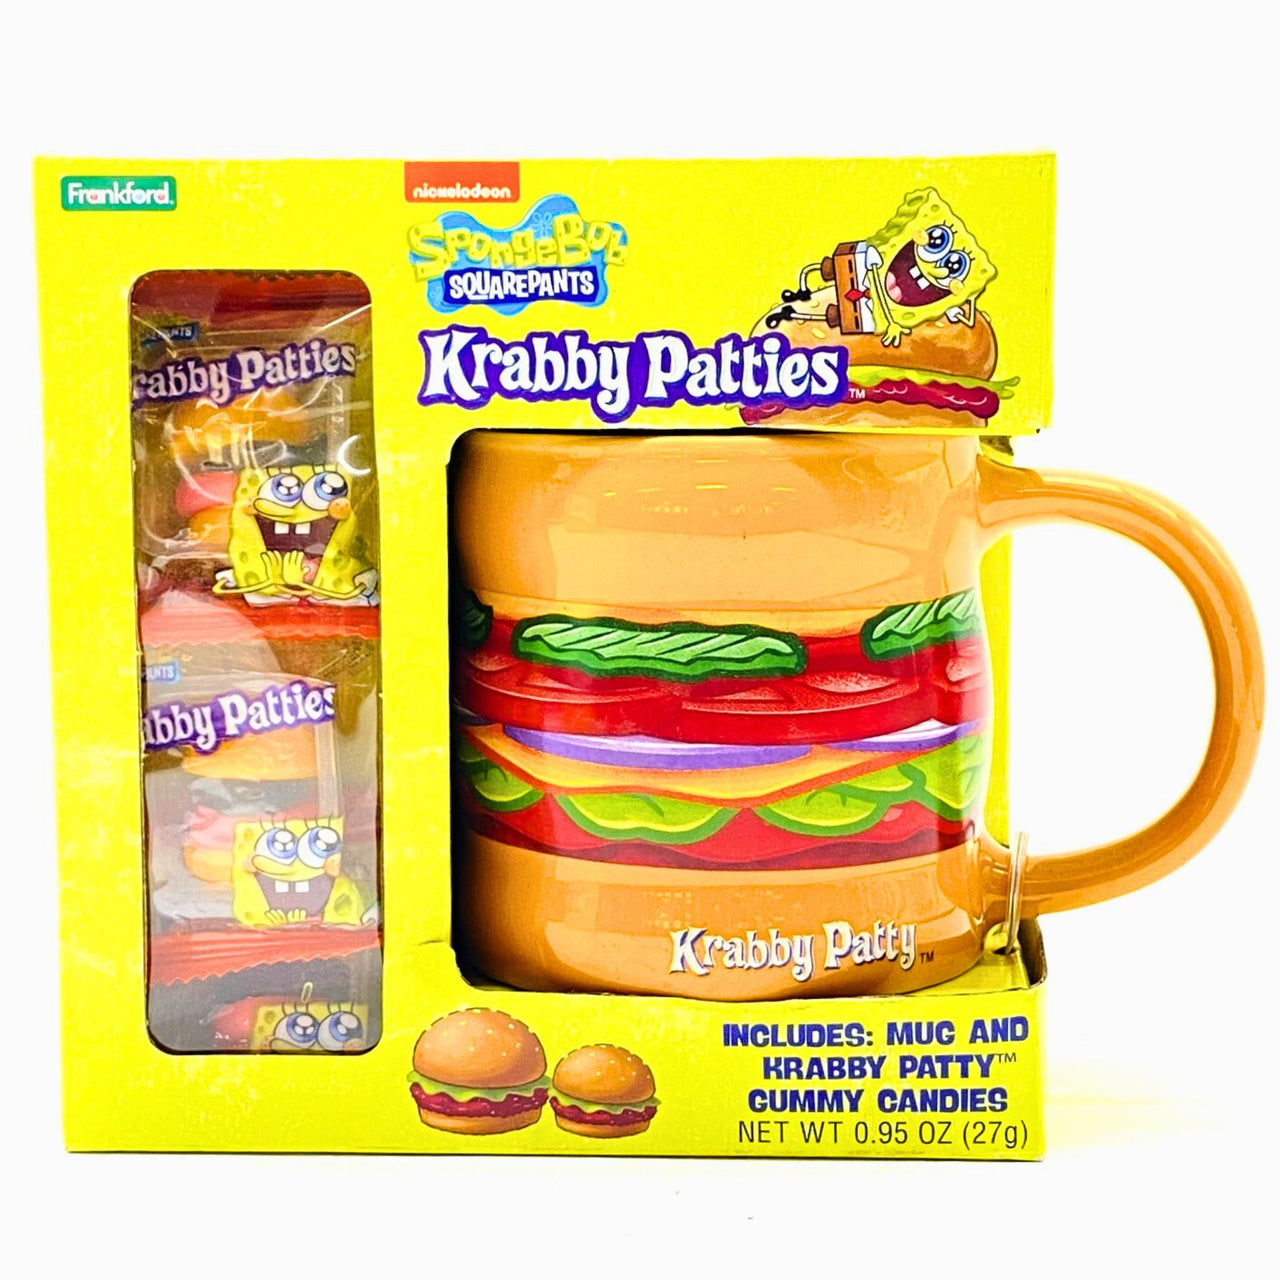 Spongebob Square Pants Krabby Patties Includes Mug and Krabby Patty Gummy Candies